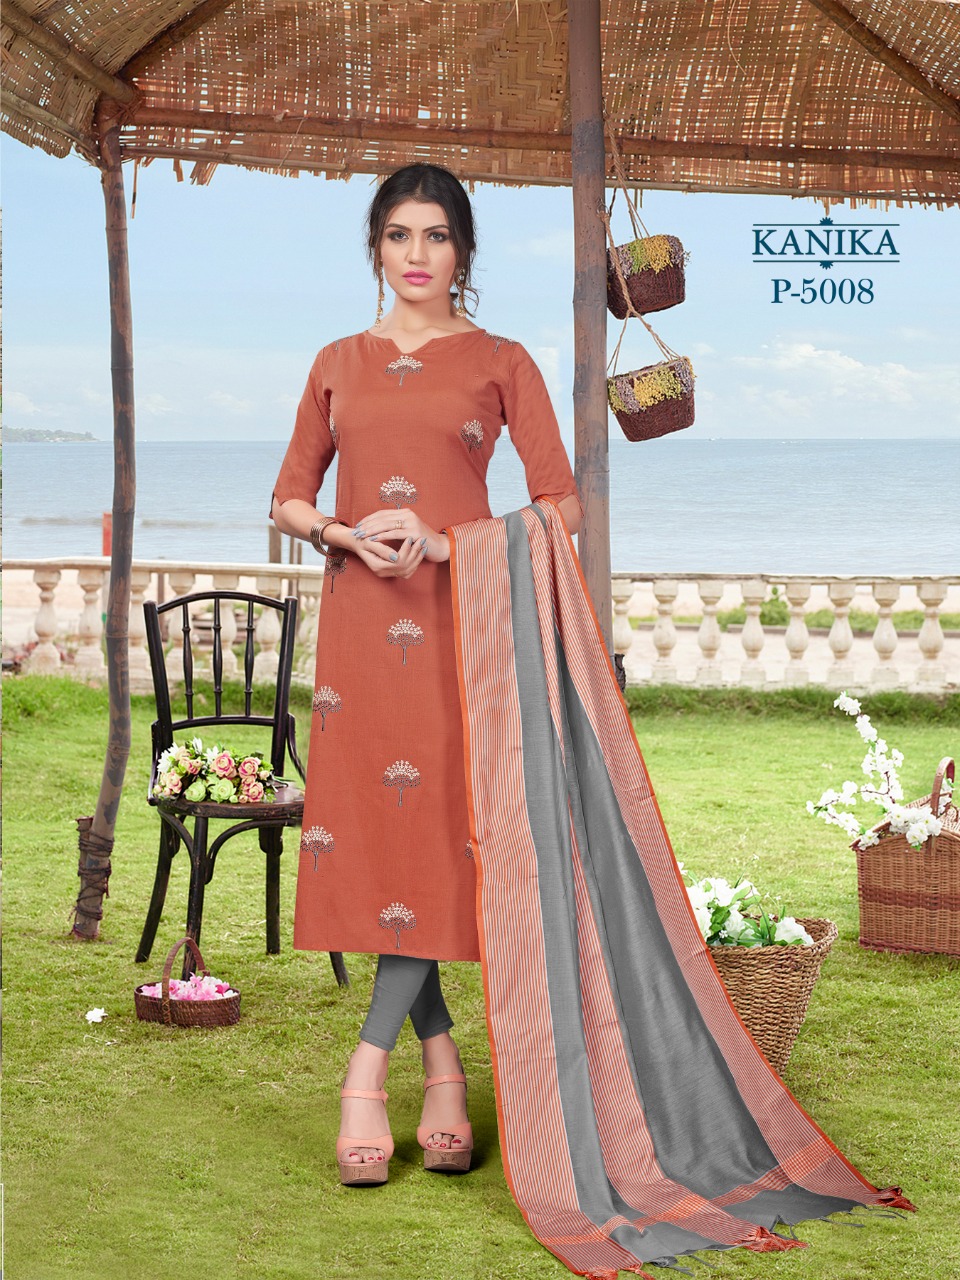 Kanika Rangoon Vol-2 innovative style Kurties in wholesale prices